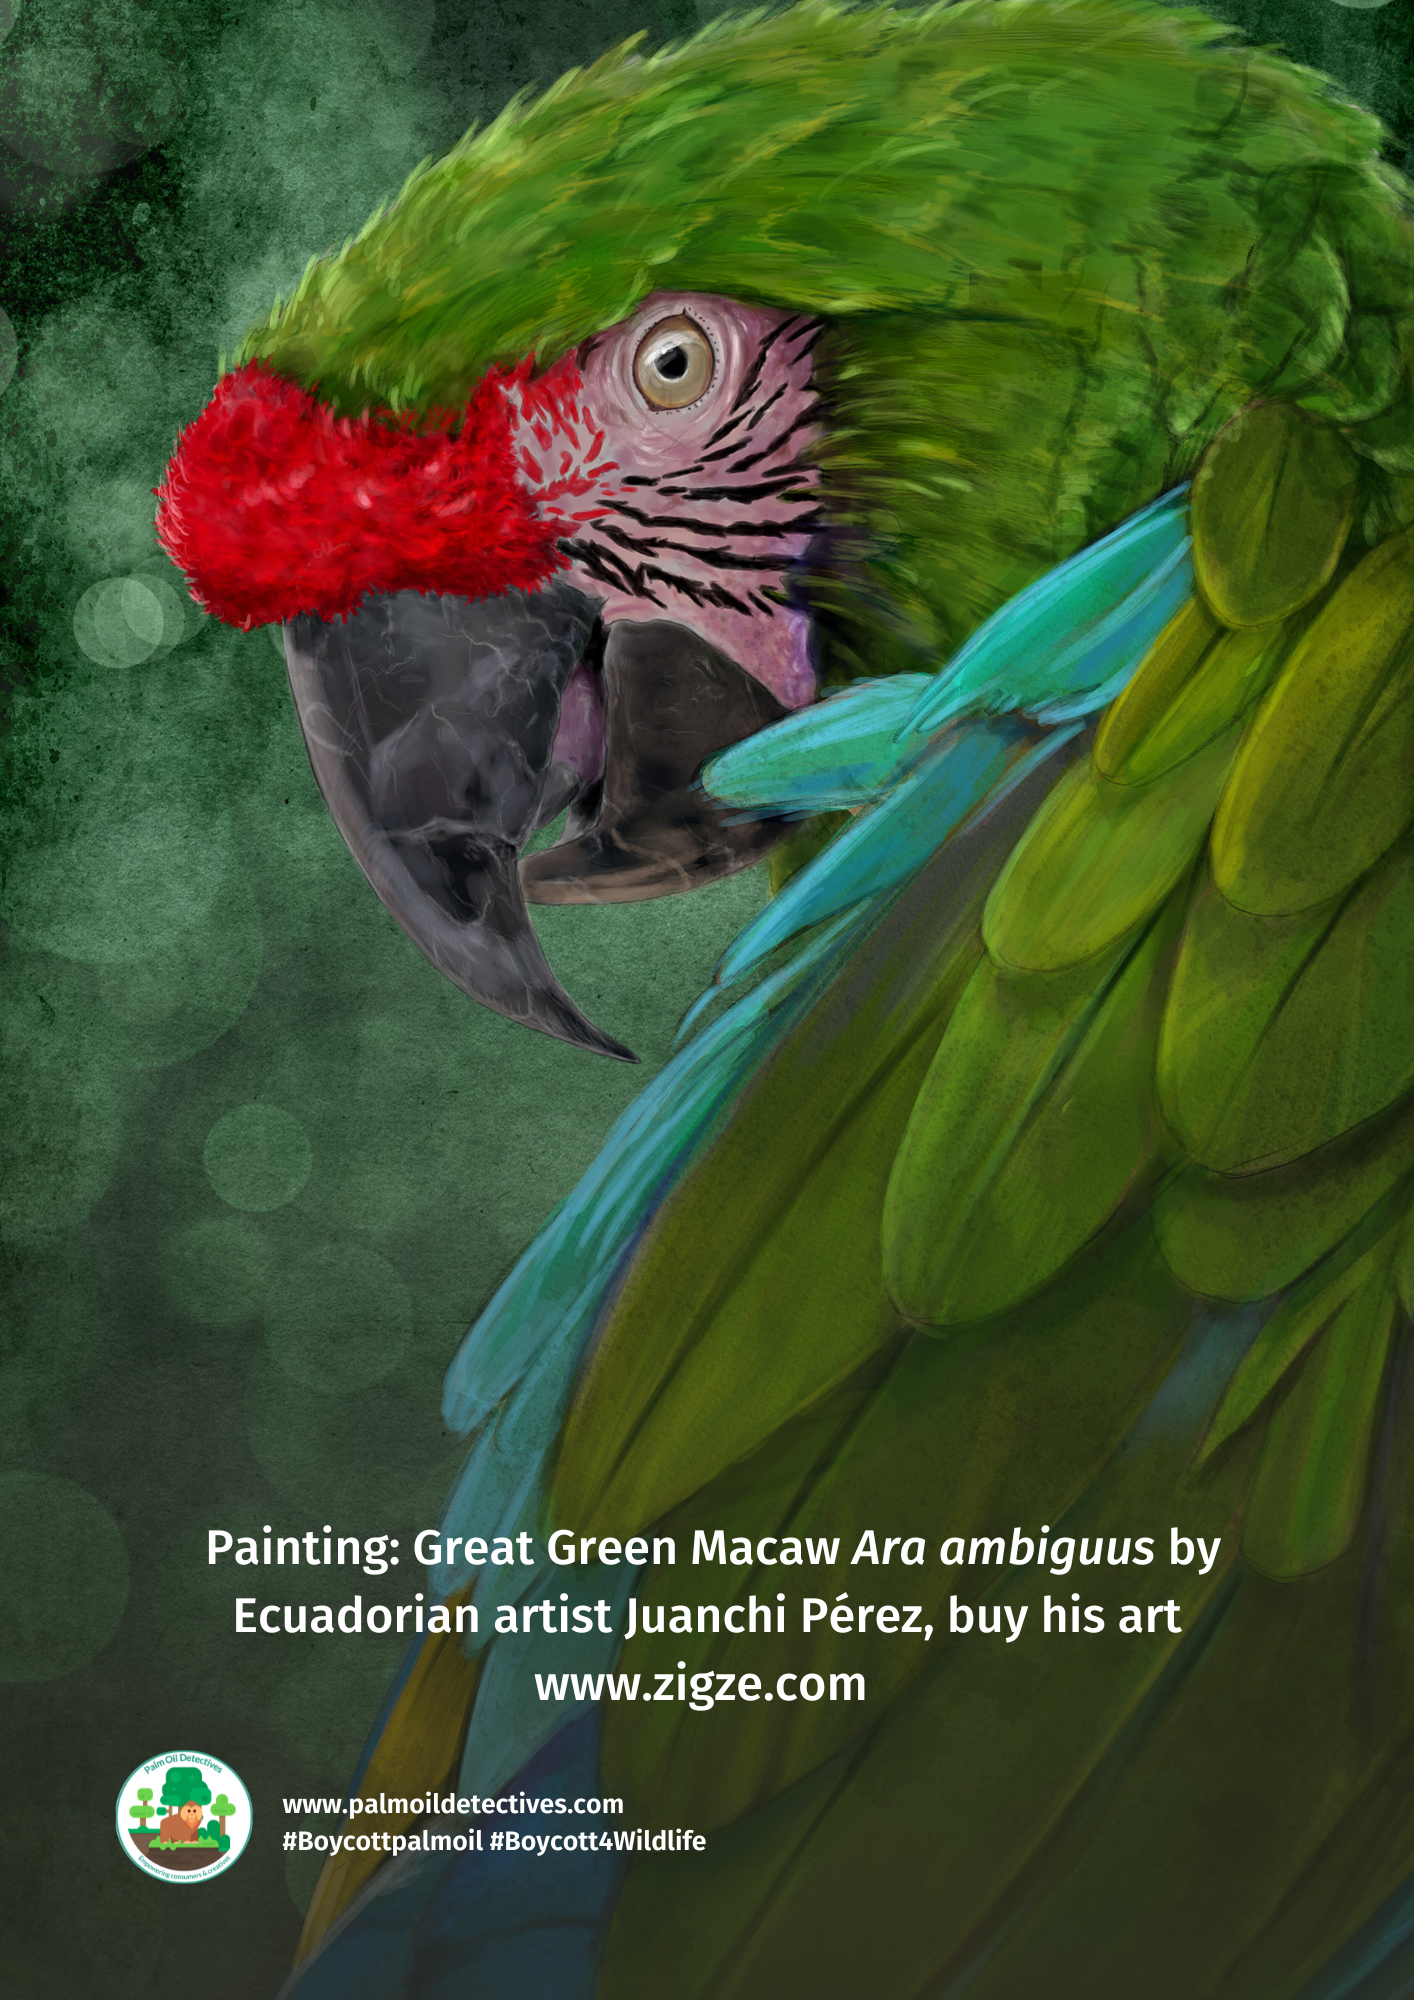 Great Green Macaw Ara ambiguus by Ecuadorian artist Juanchi Pérez portrait